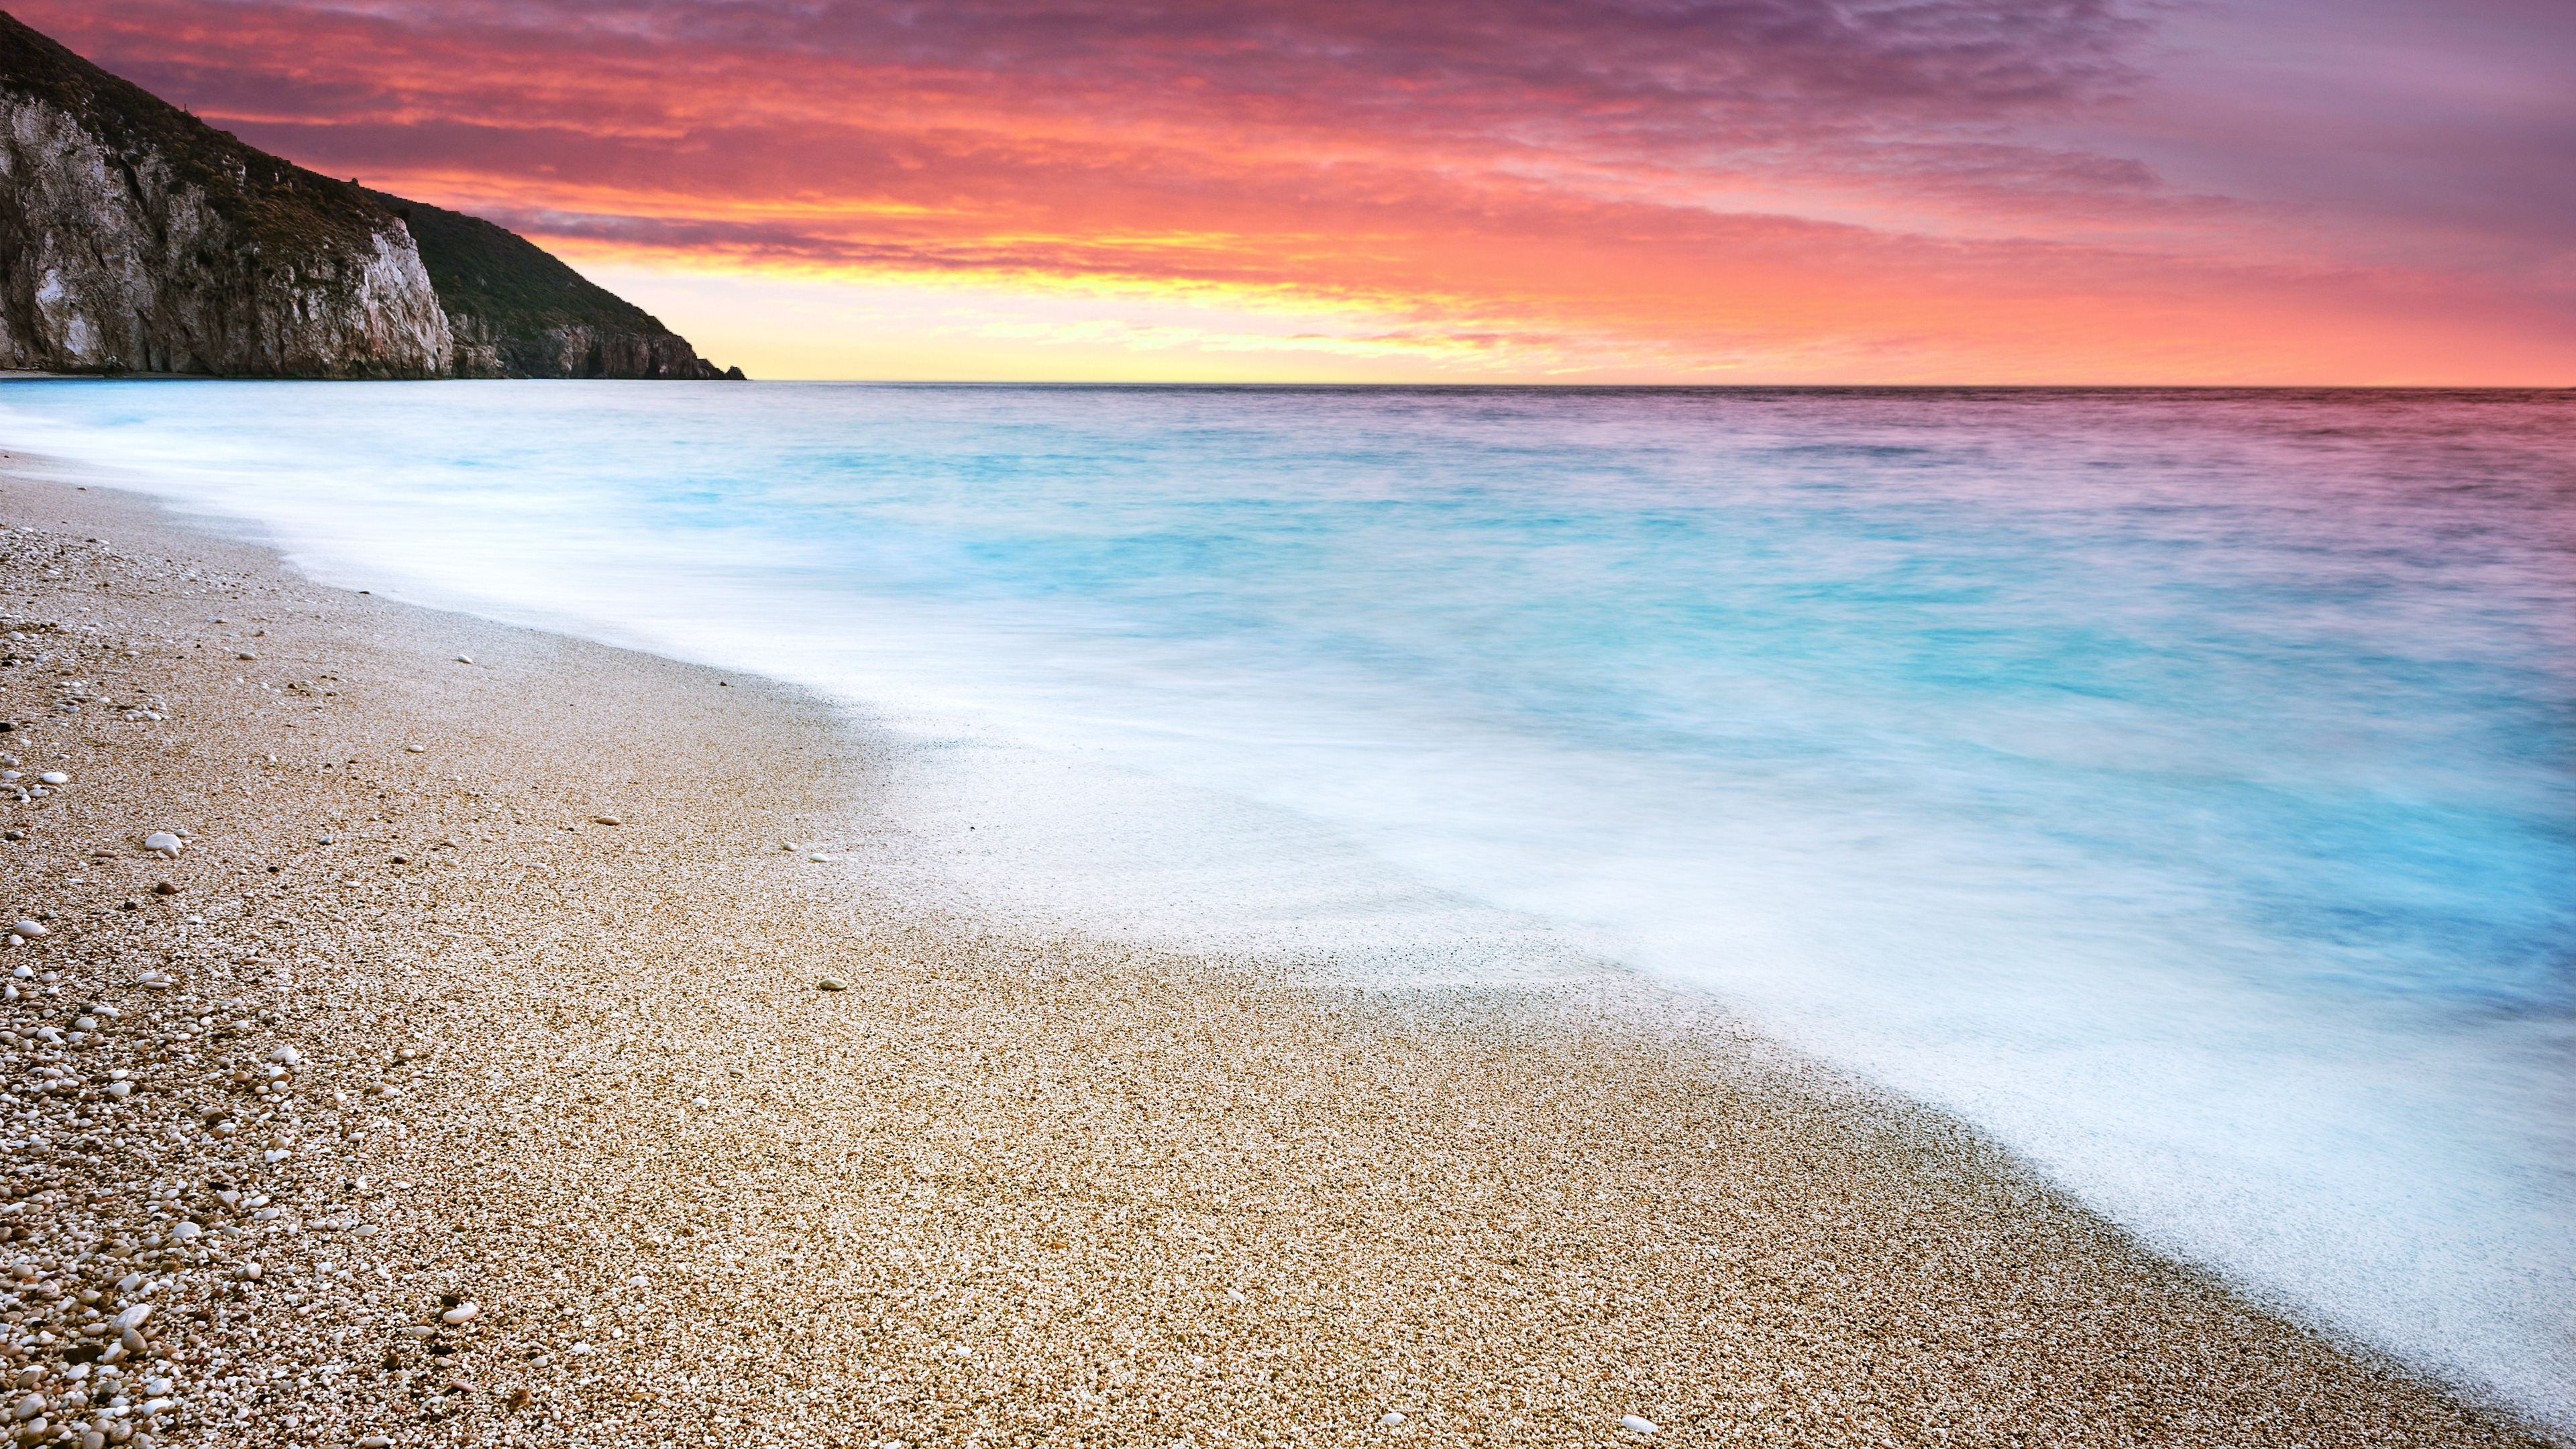 Fire Sunset at Beach for 3840 x 2160 Ultra HD resolution